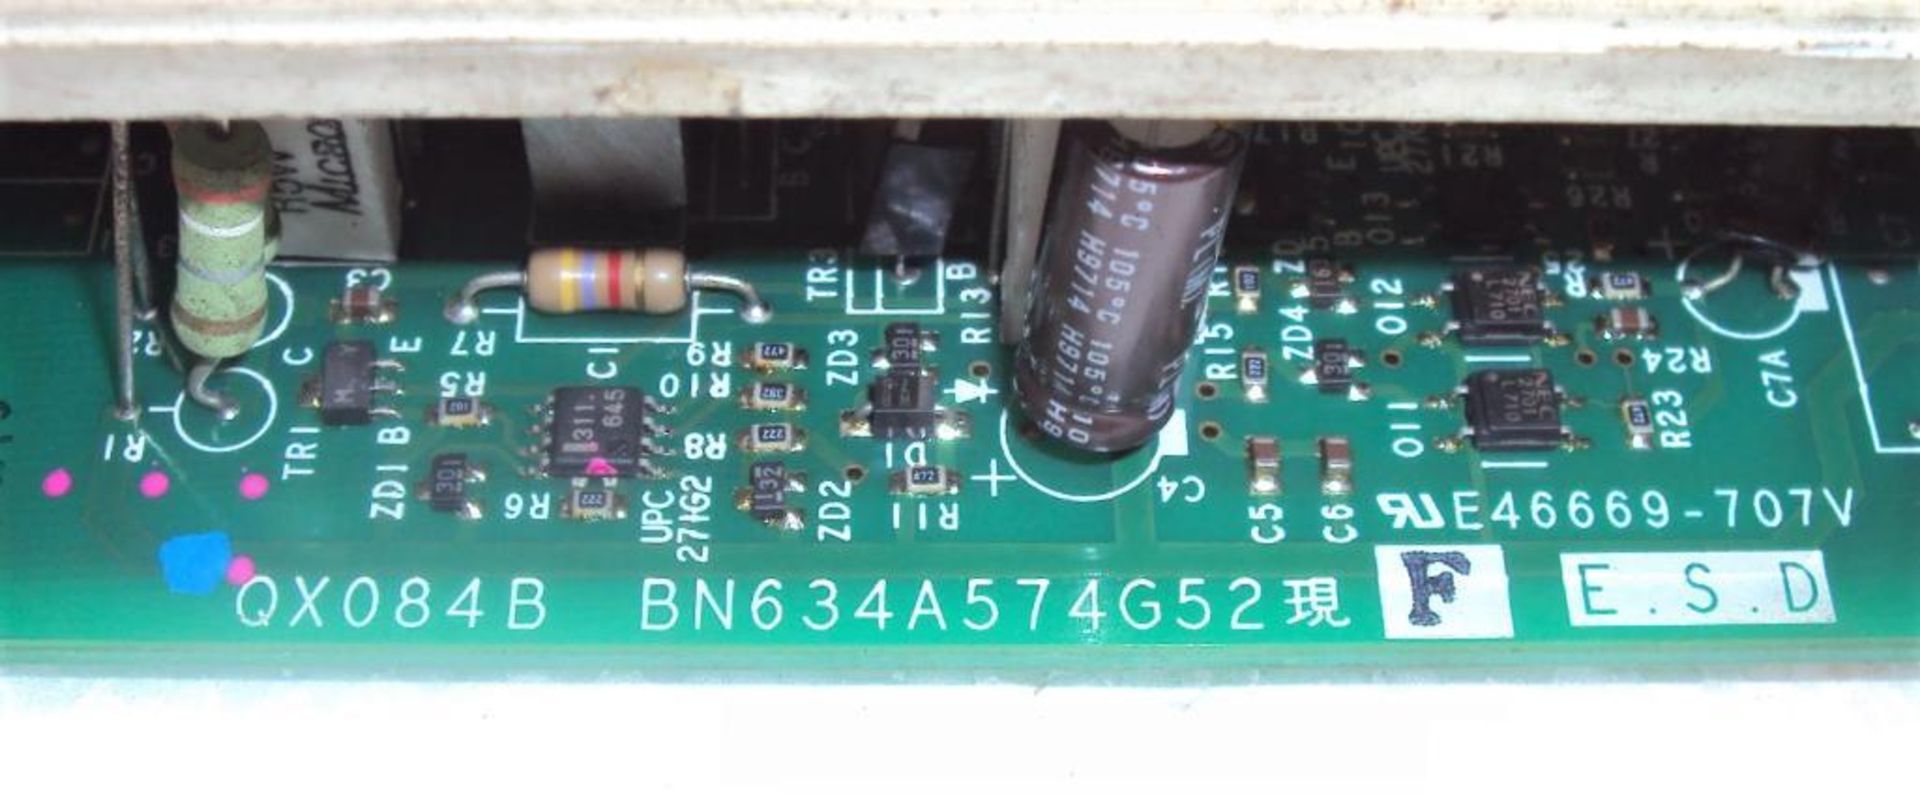 Mitsubishi QX084B BN634A574G52 Power Supply Module - Image 4 of 5